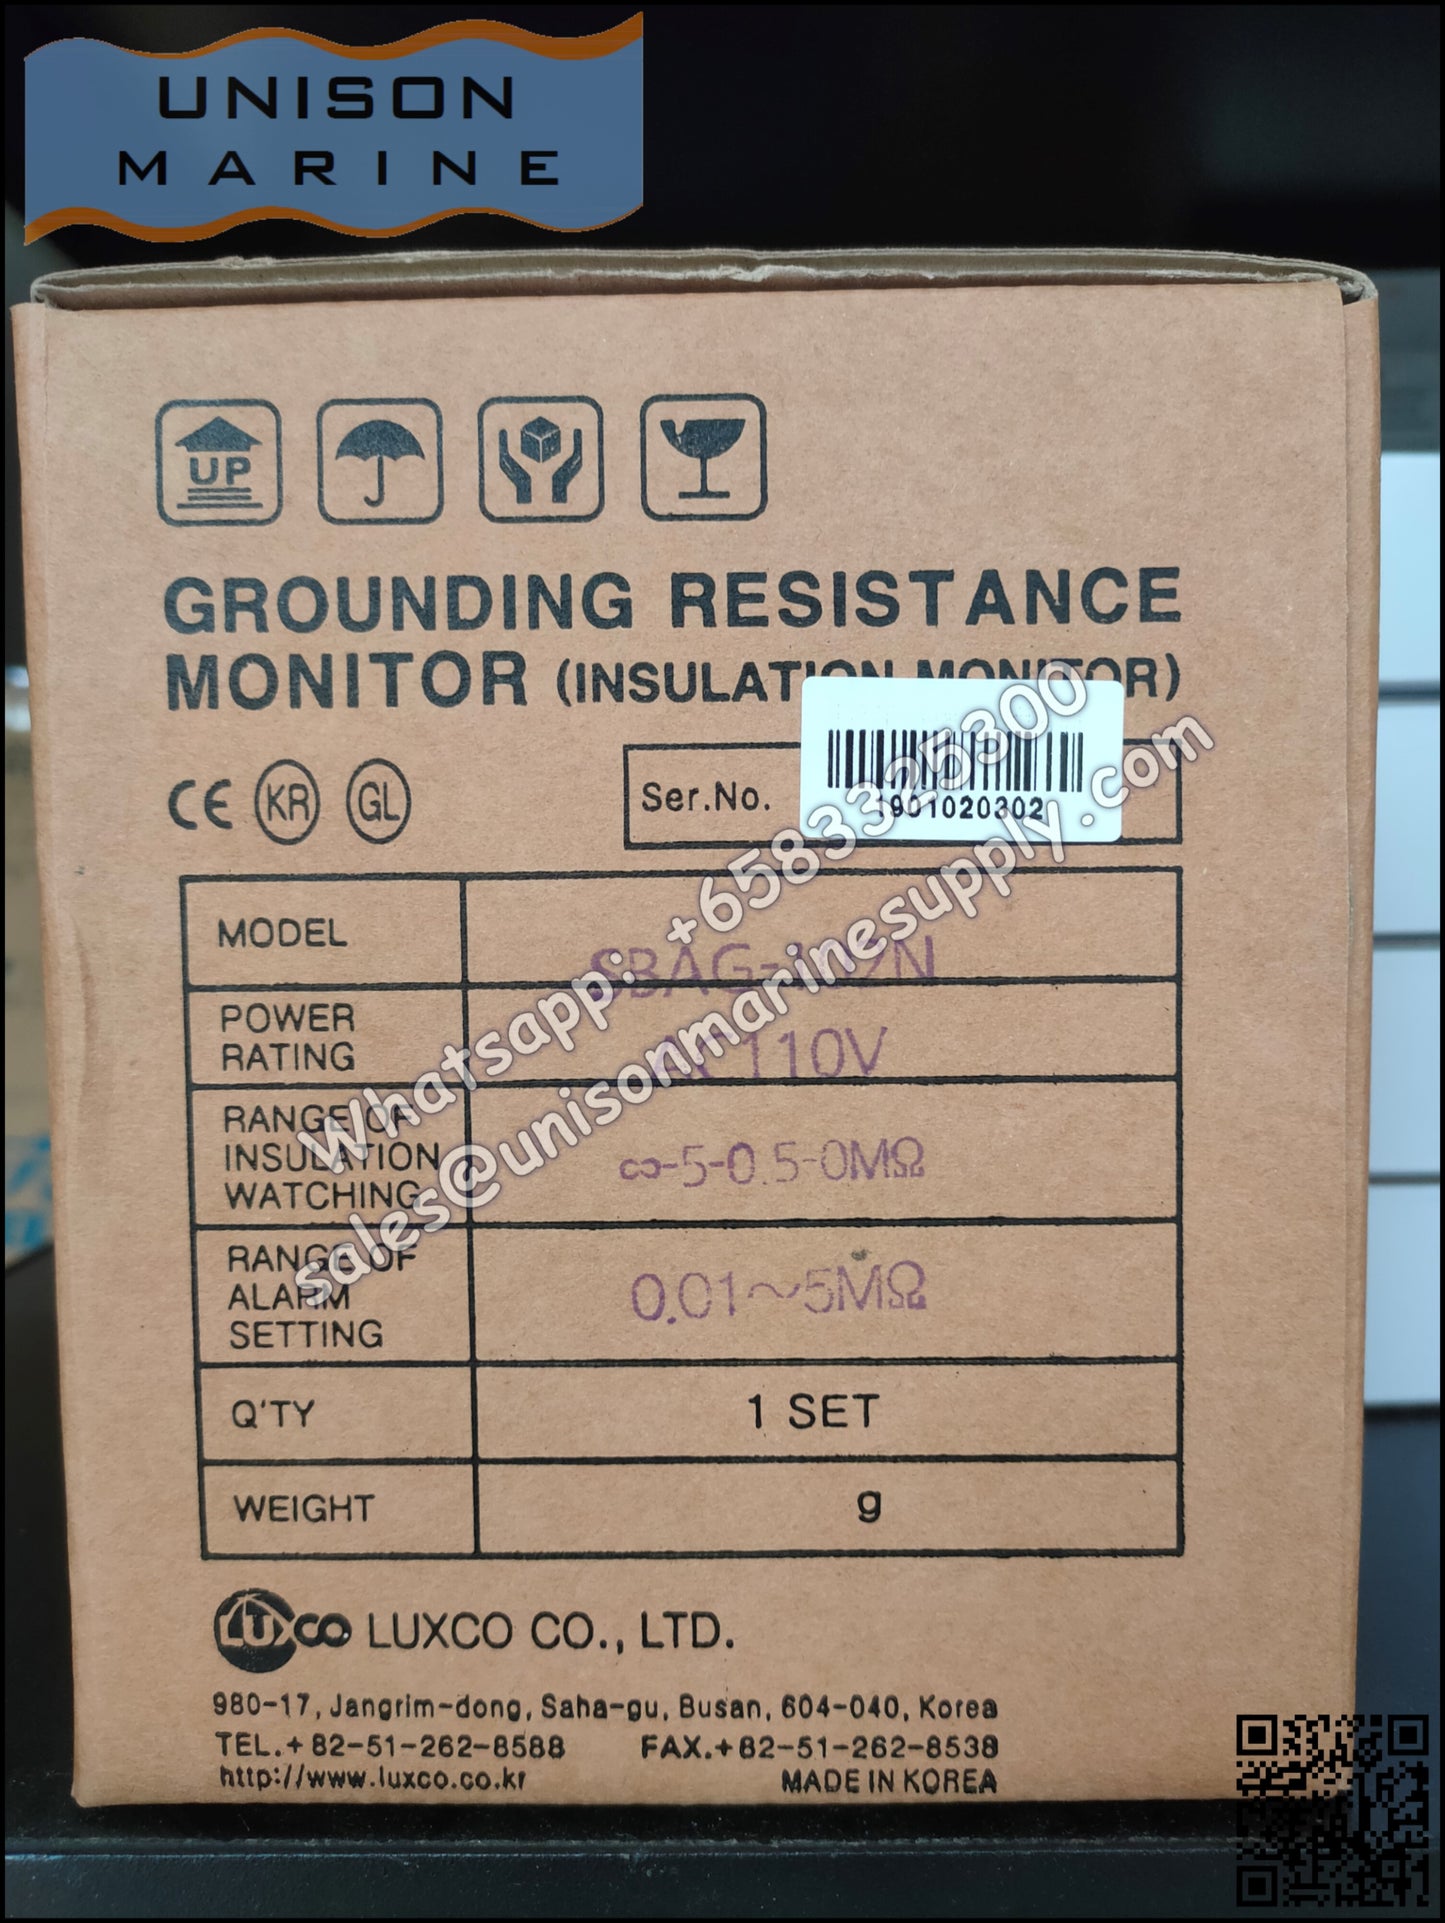 Westronics (LUXCO) Marine insulation resistance monitor :SBAG-102 / SBAG-102N.